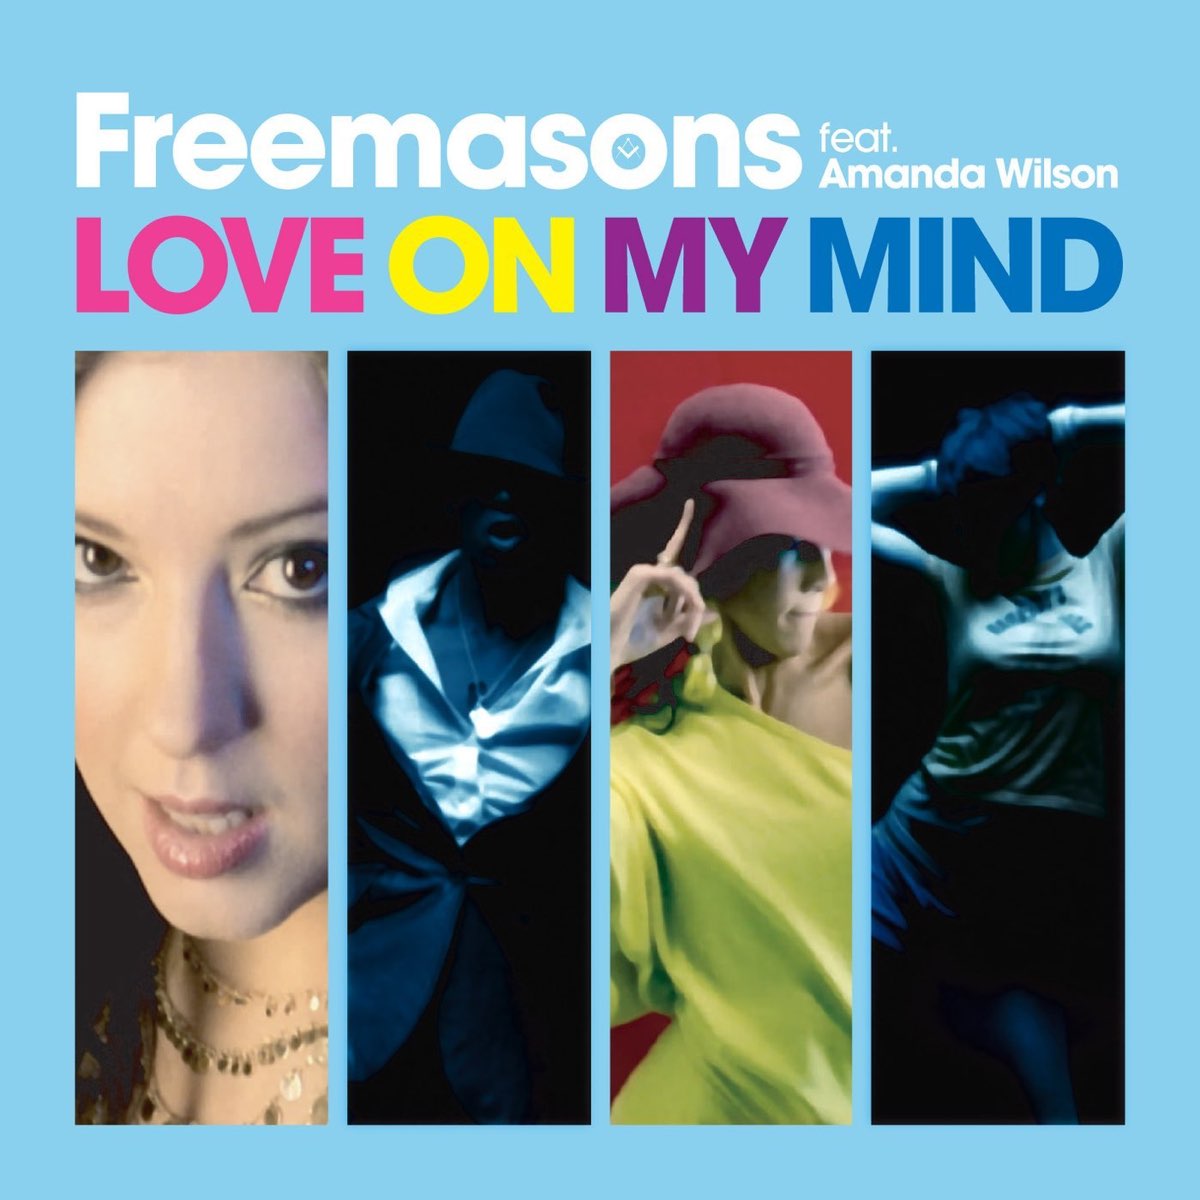 Freemasons ft. featuring Amanda Wilson Love on My Mind cover artwork